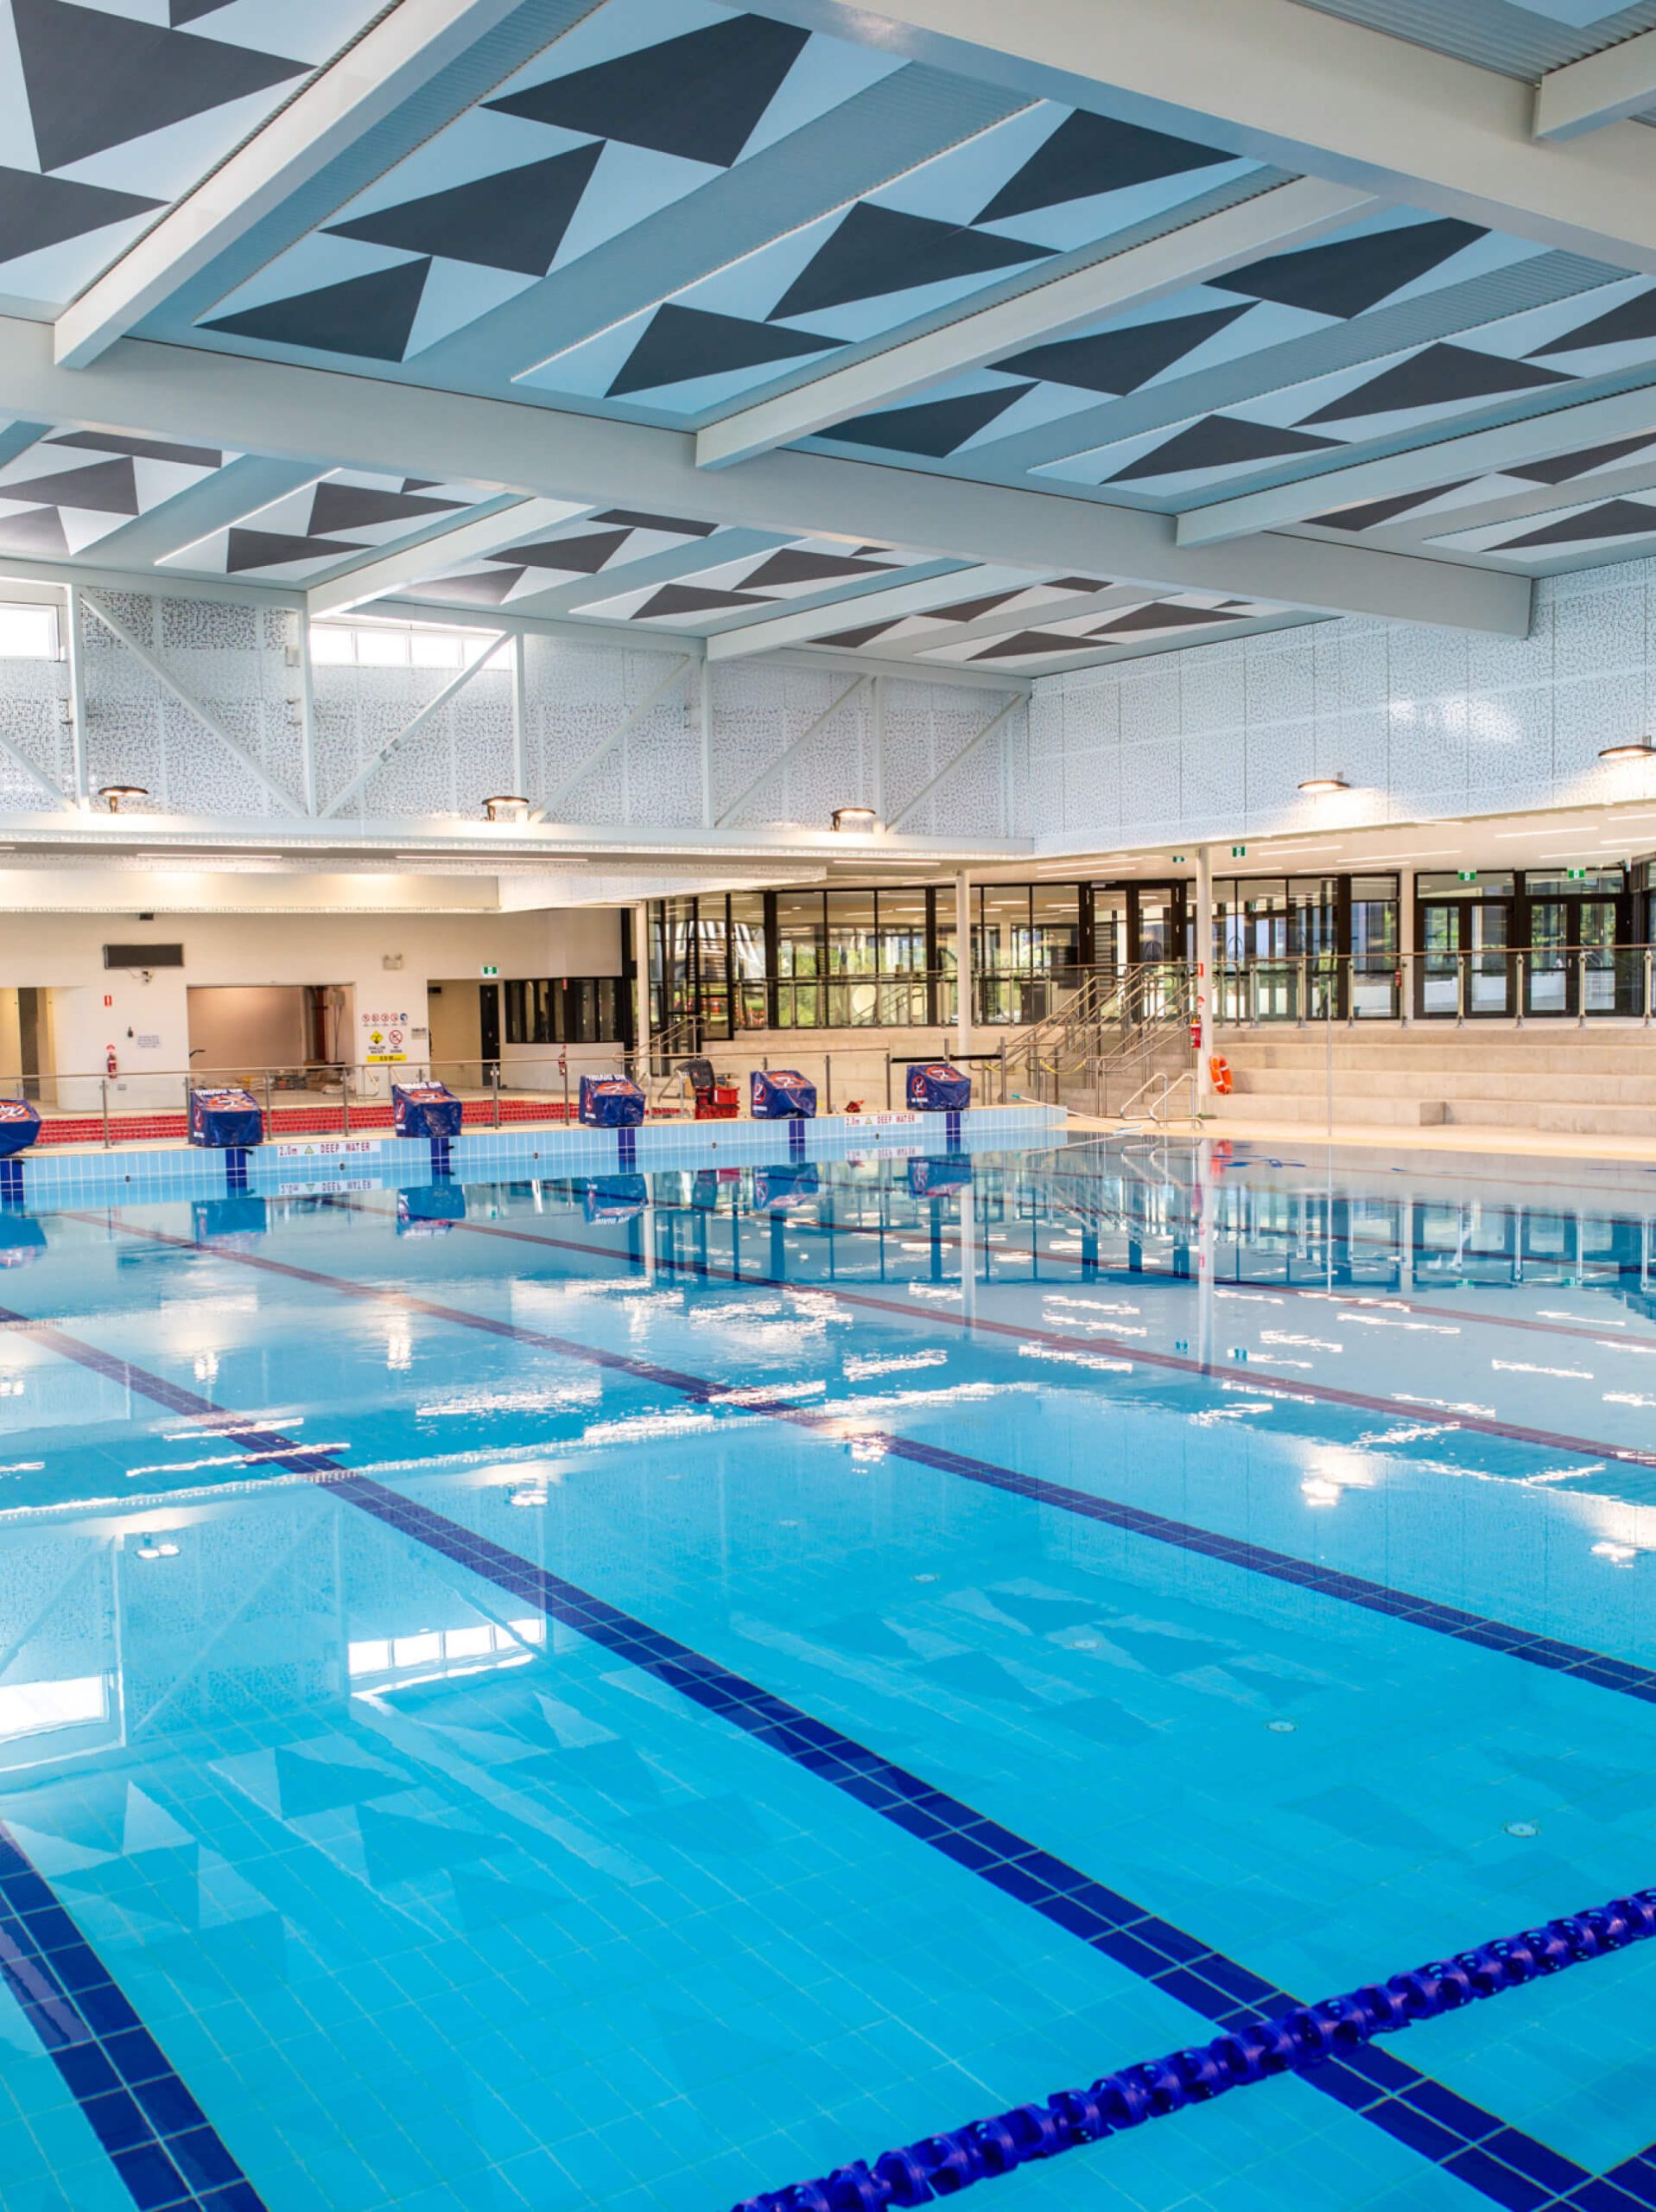 14 tara aquatic centre and sports precinct taylor construction education pool